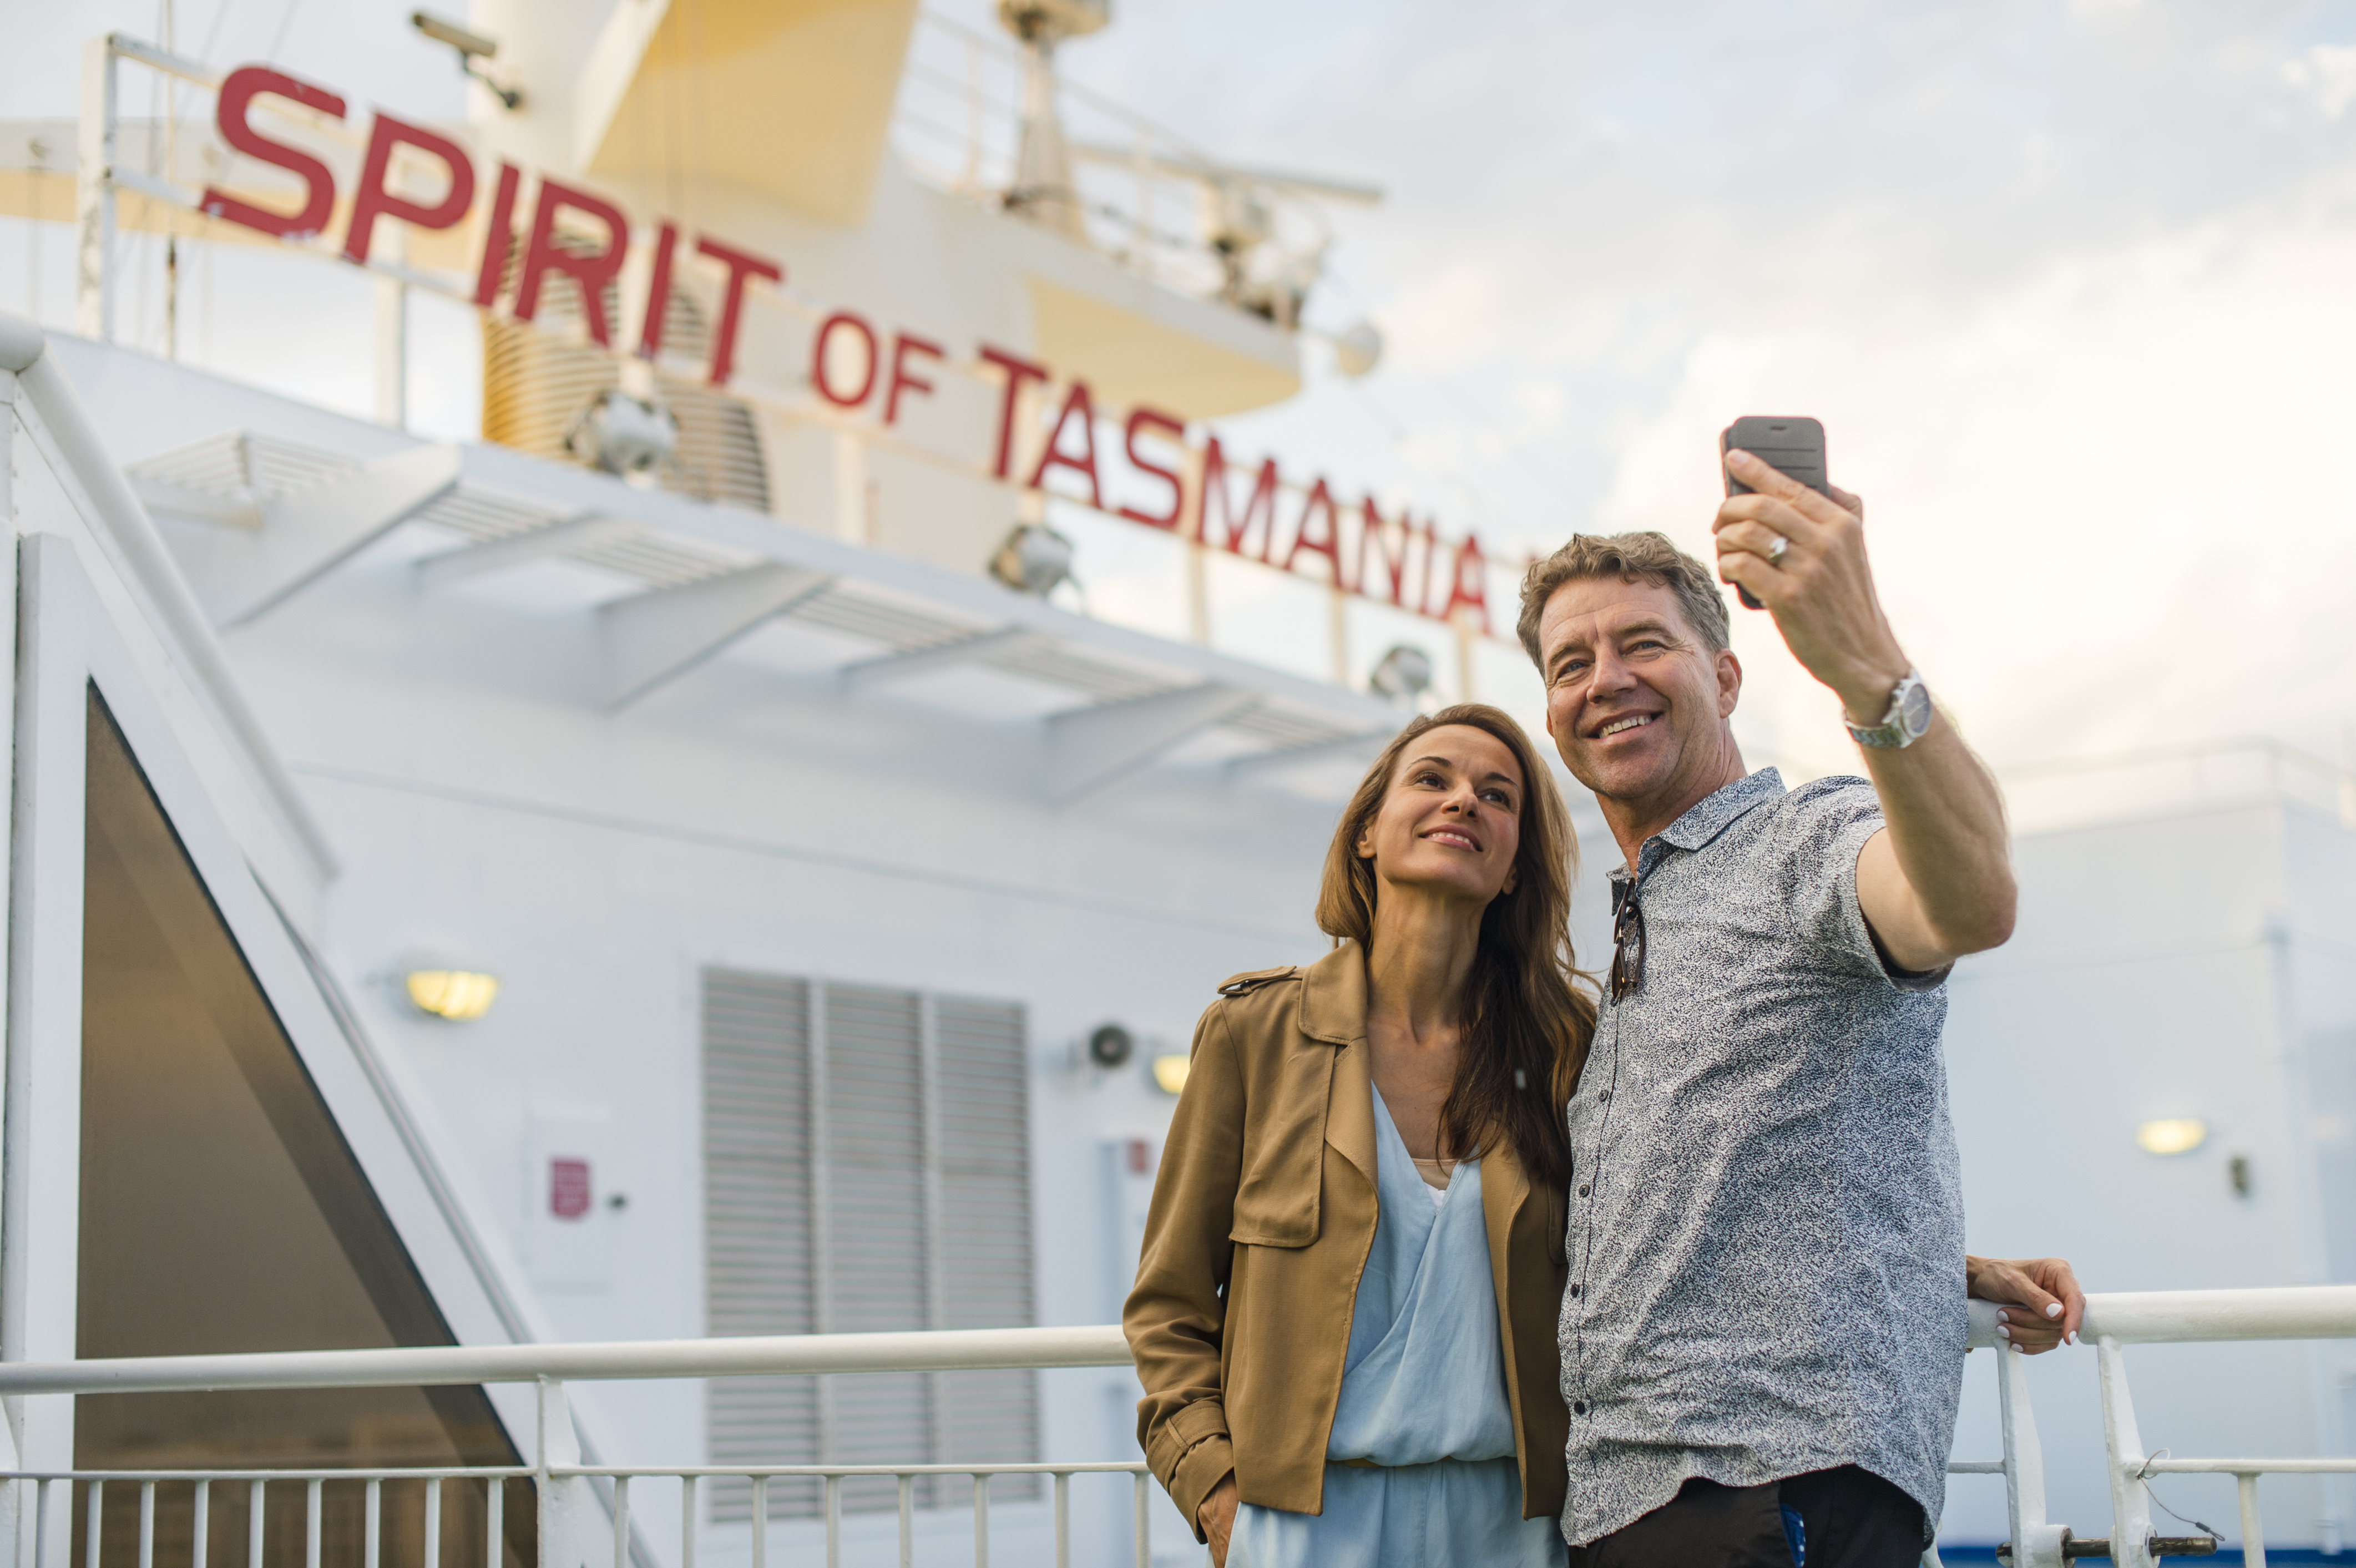 Spirit-of-Tasmania-Passengers